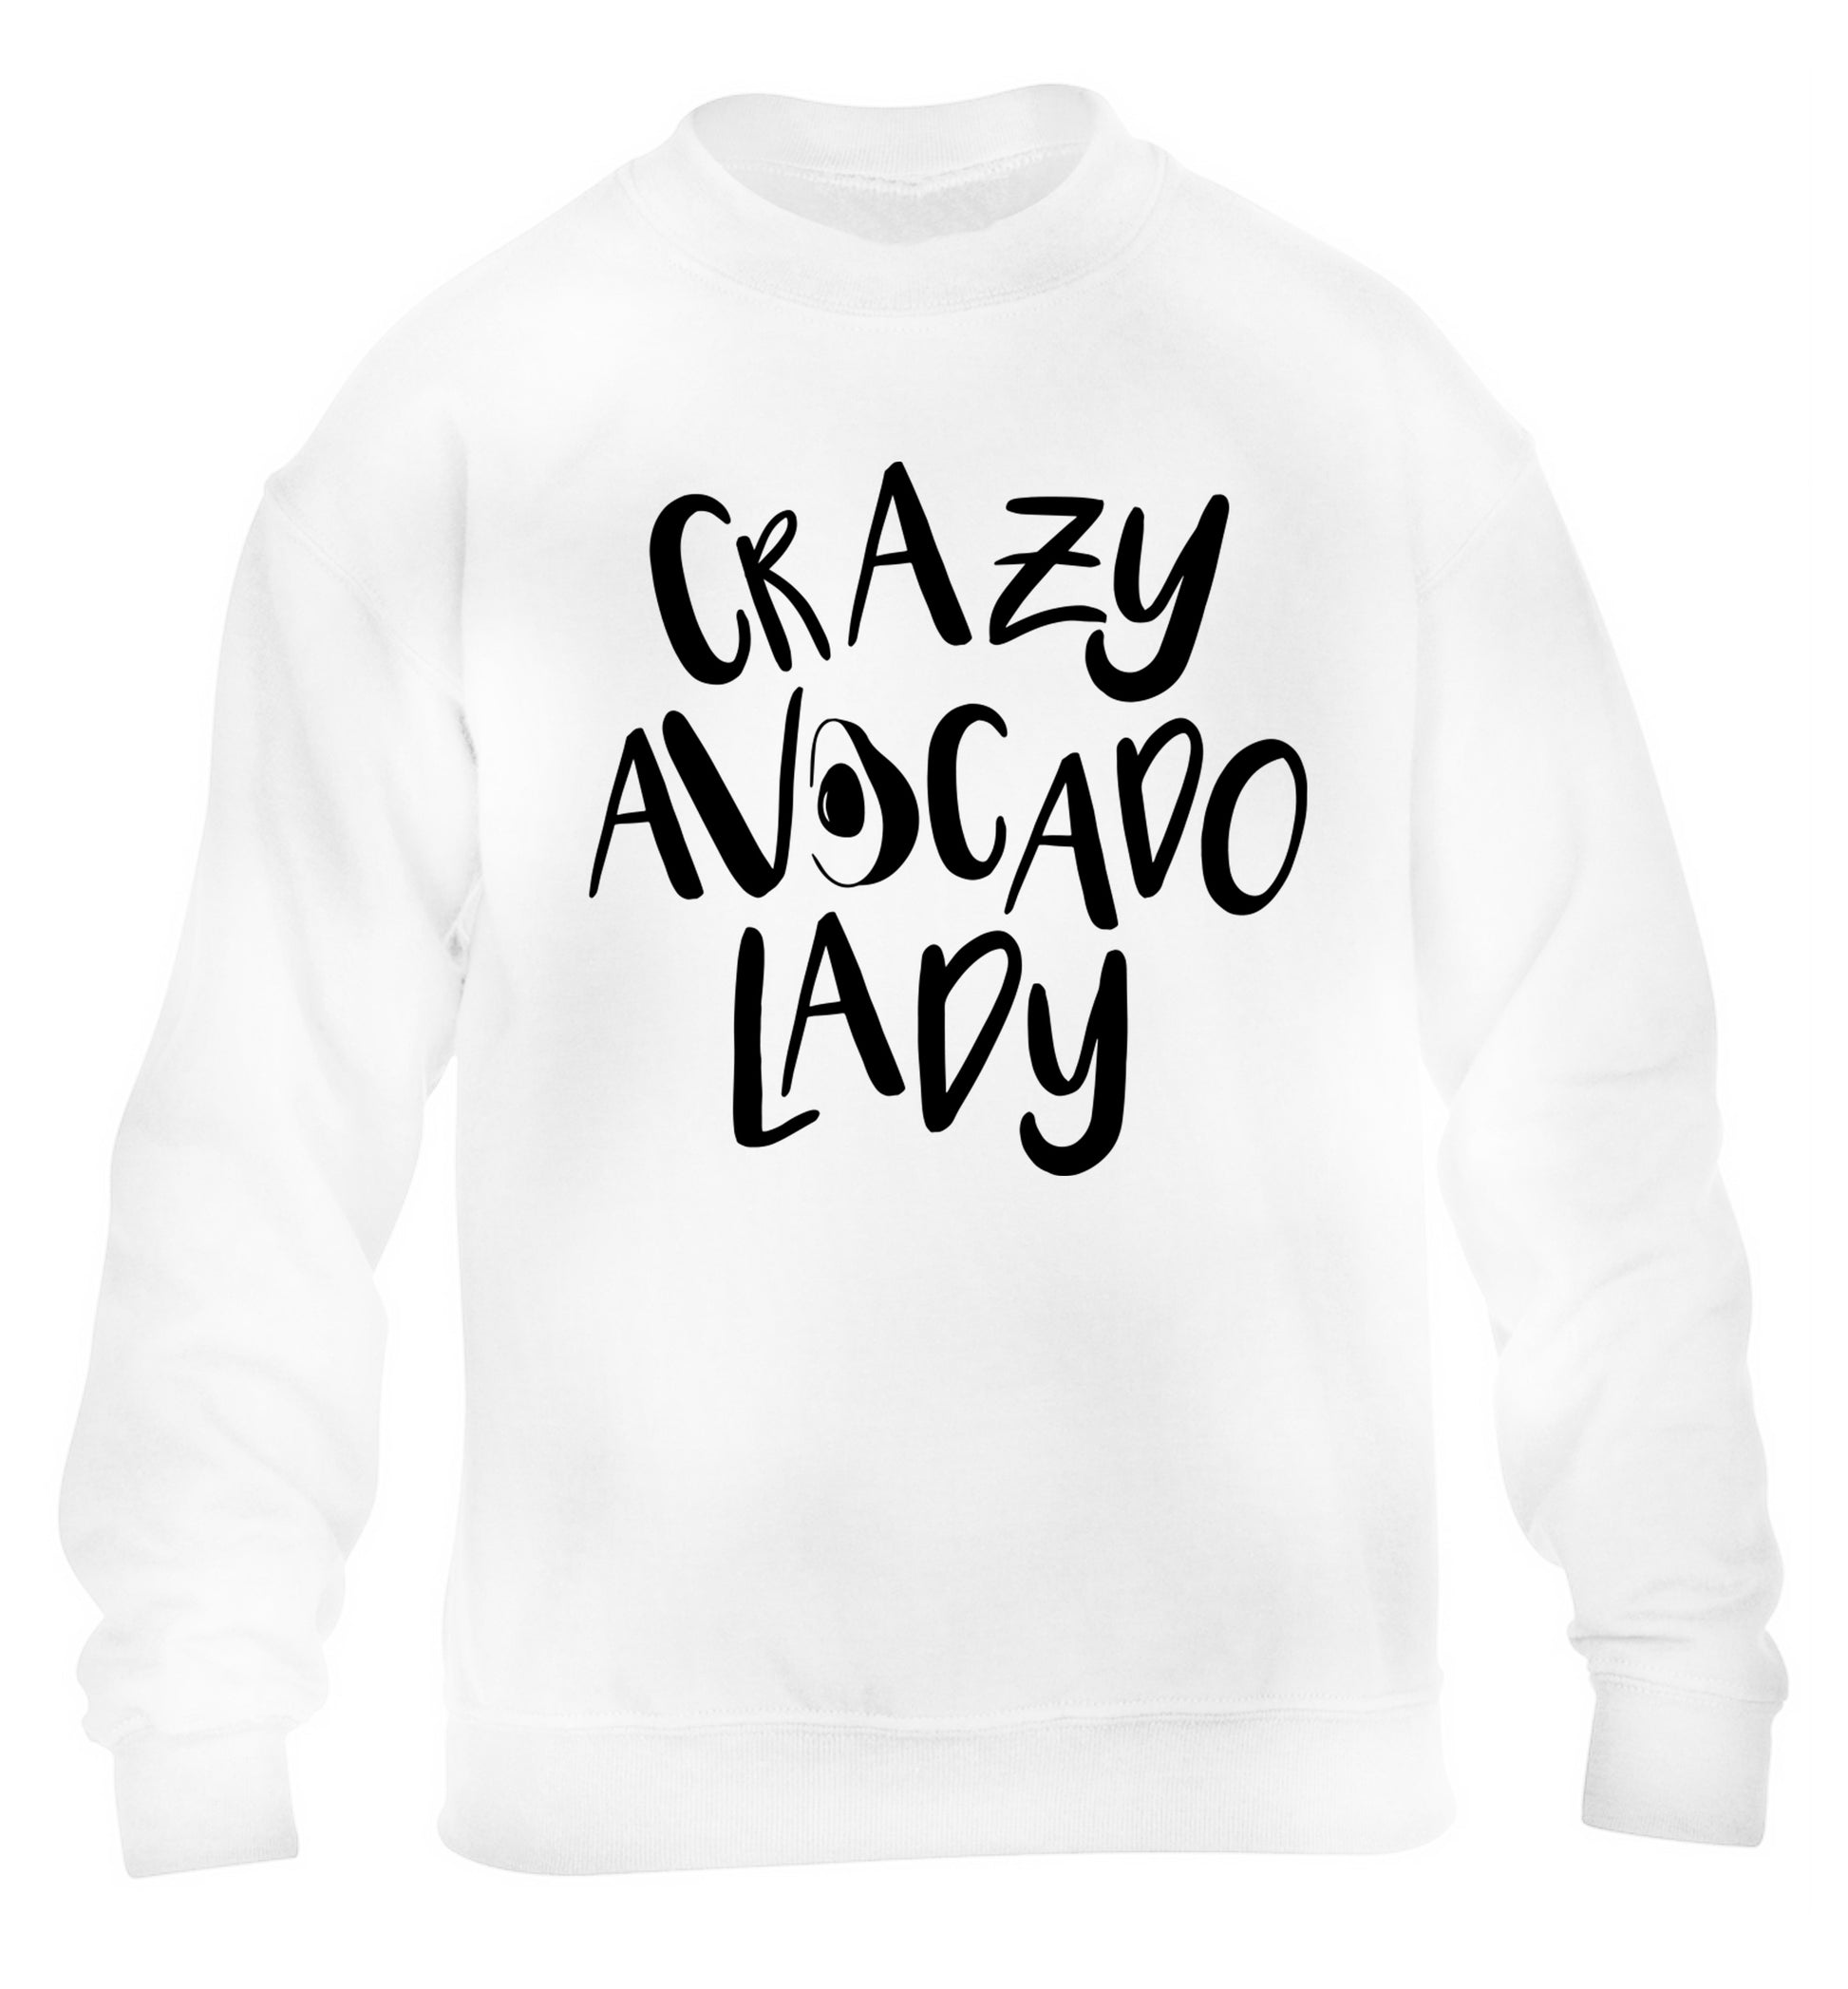 Crazy avocado lady children's white sweater 12-14 Years